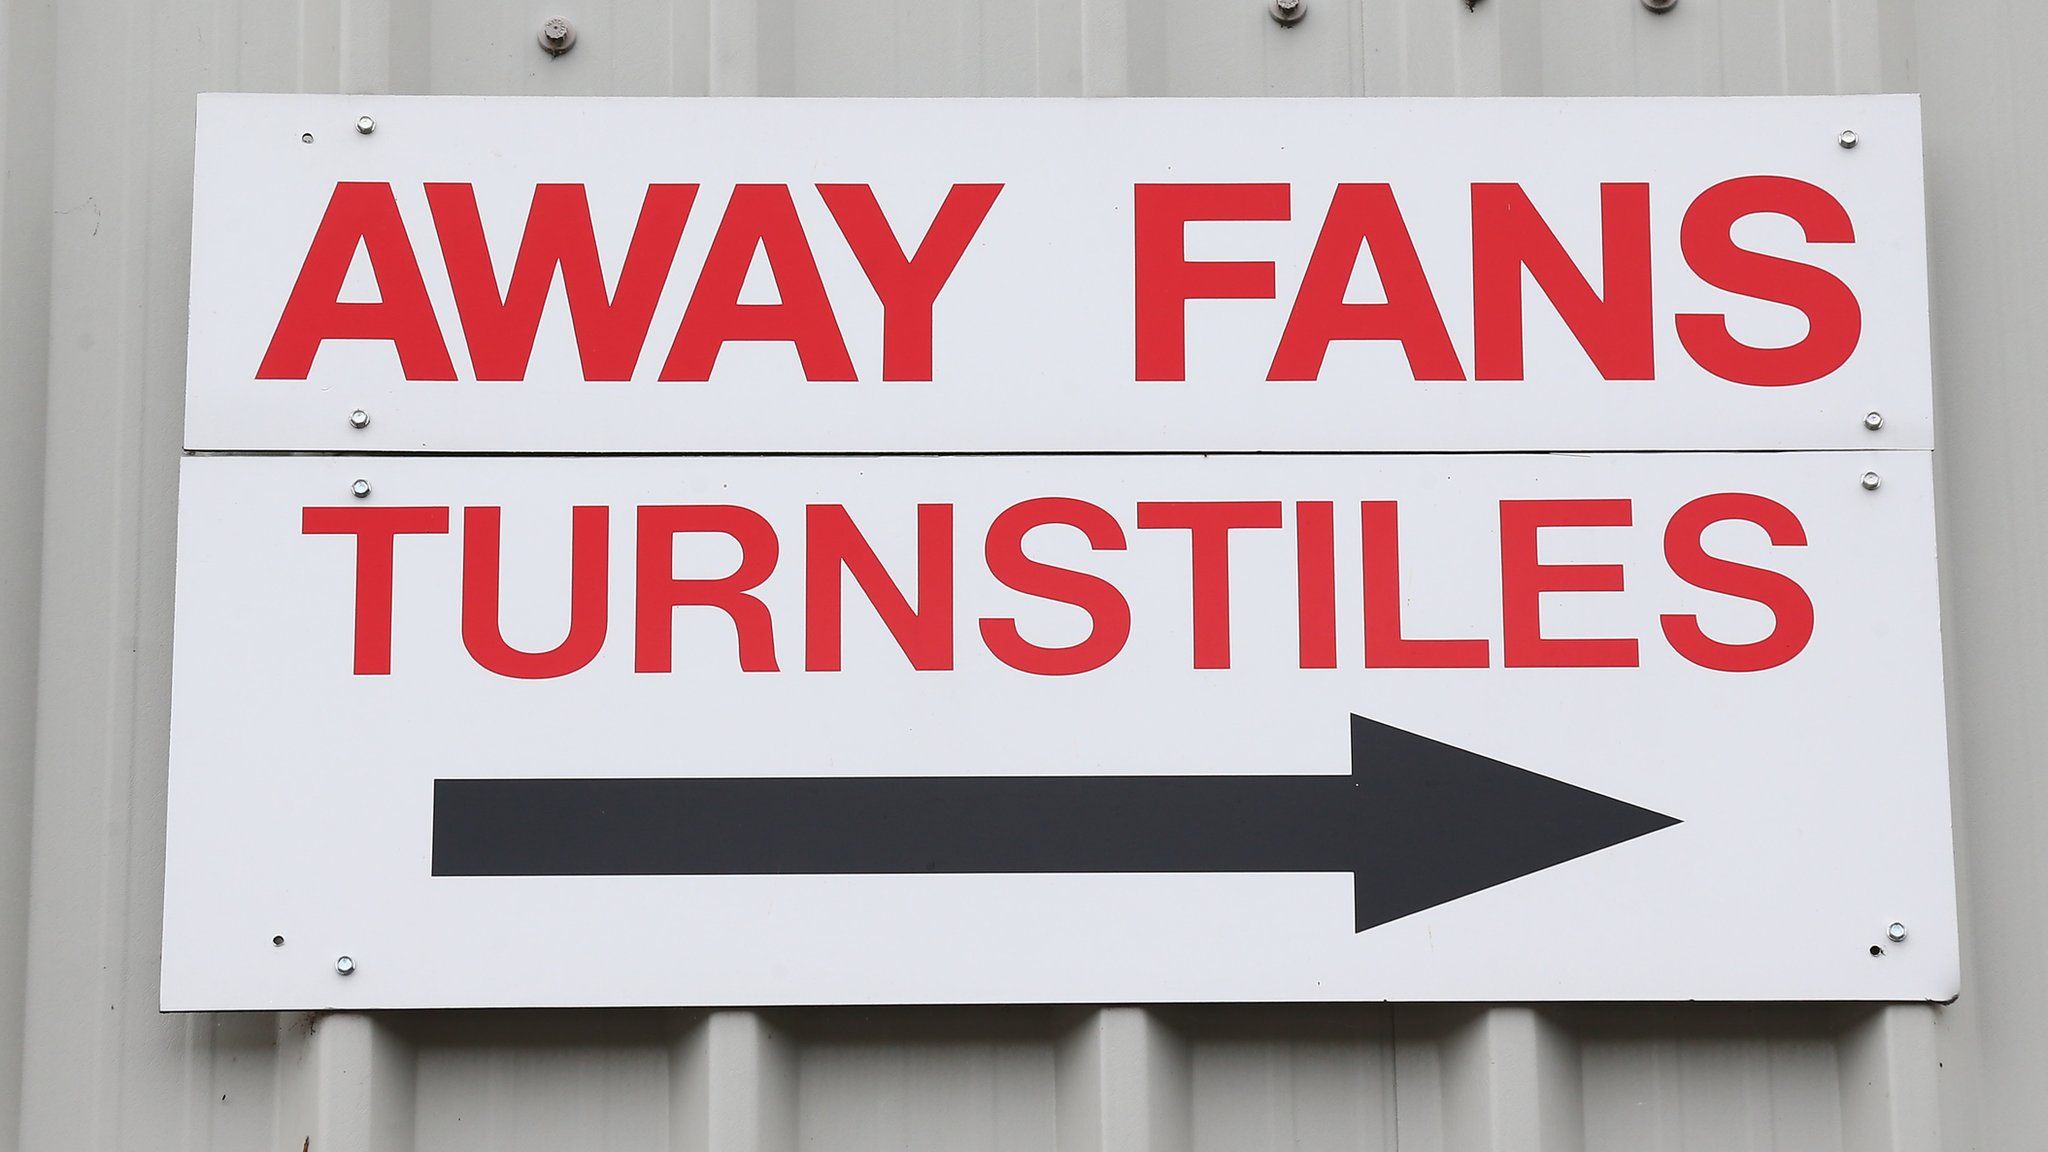 Away fans turnstiles sign outside the Silverlake Stadium at Eastleigh